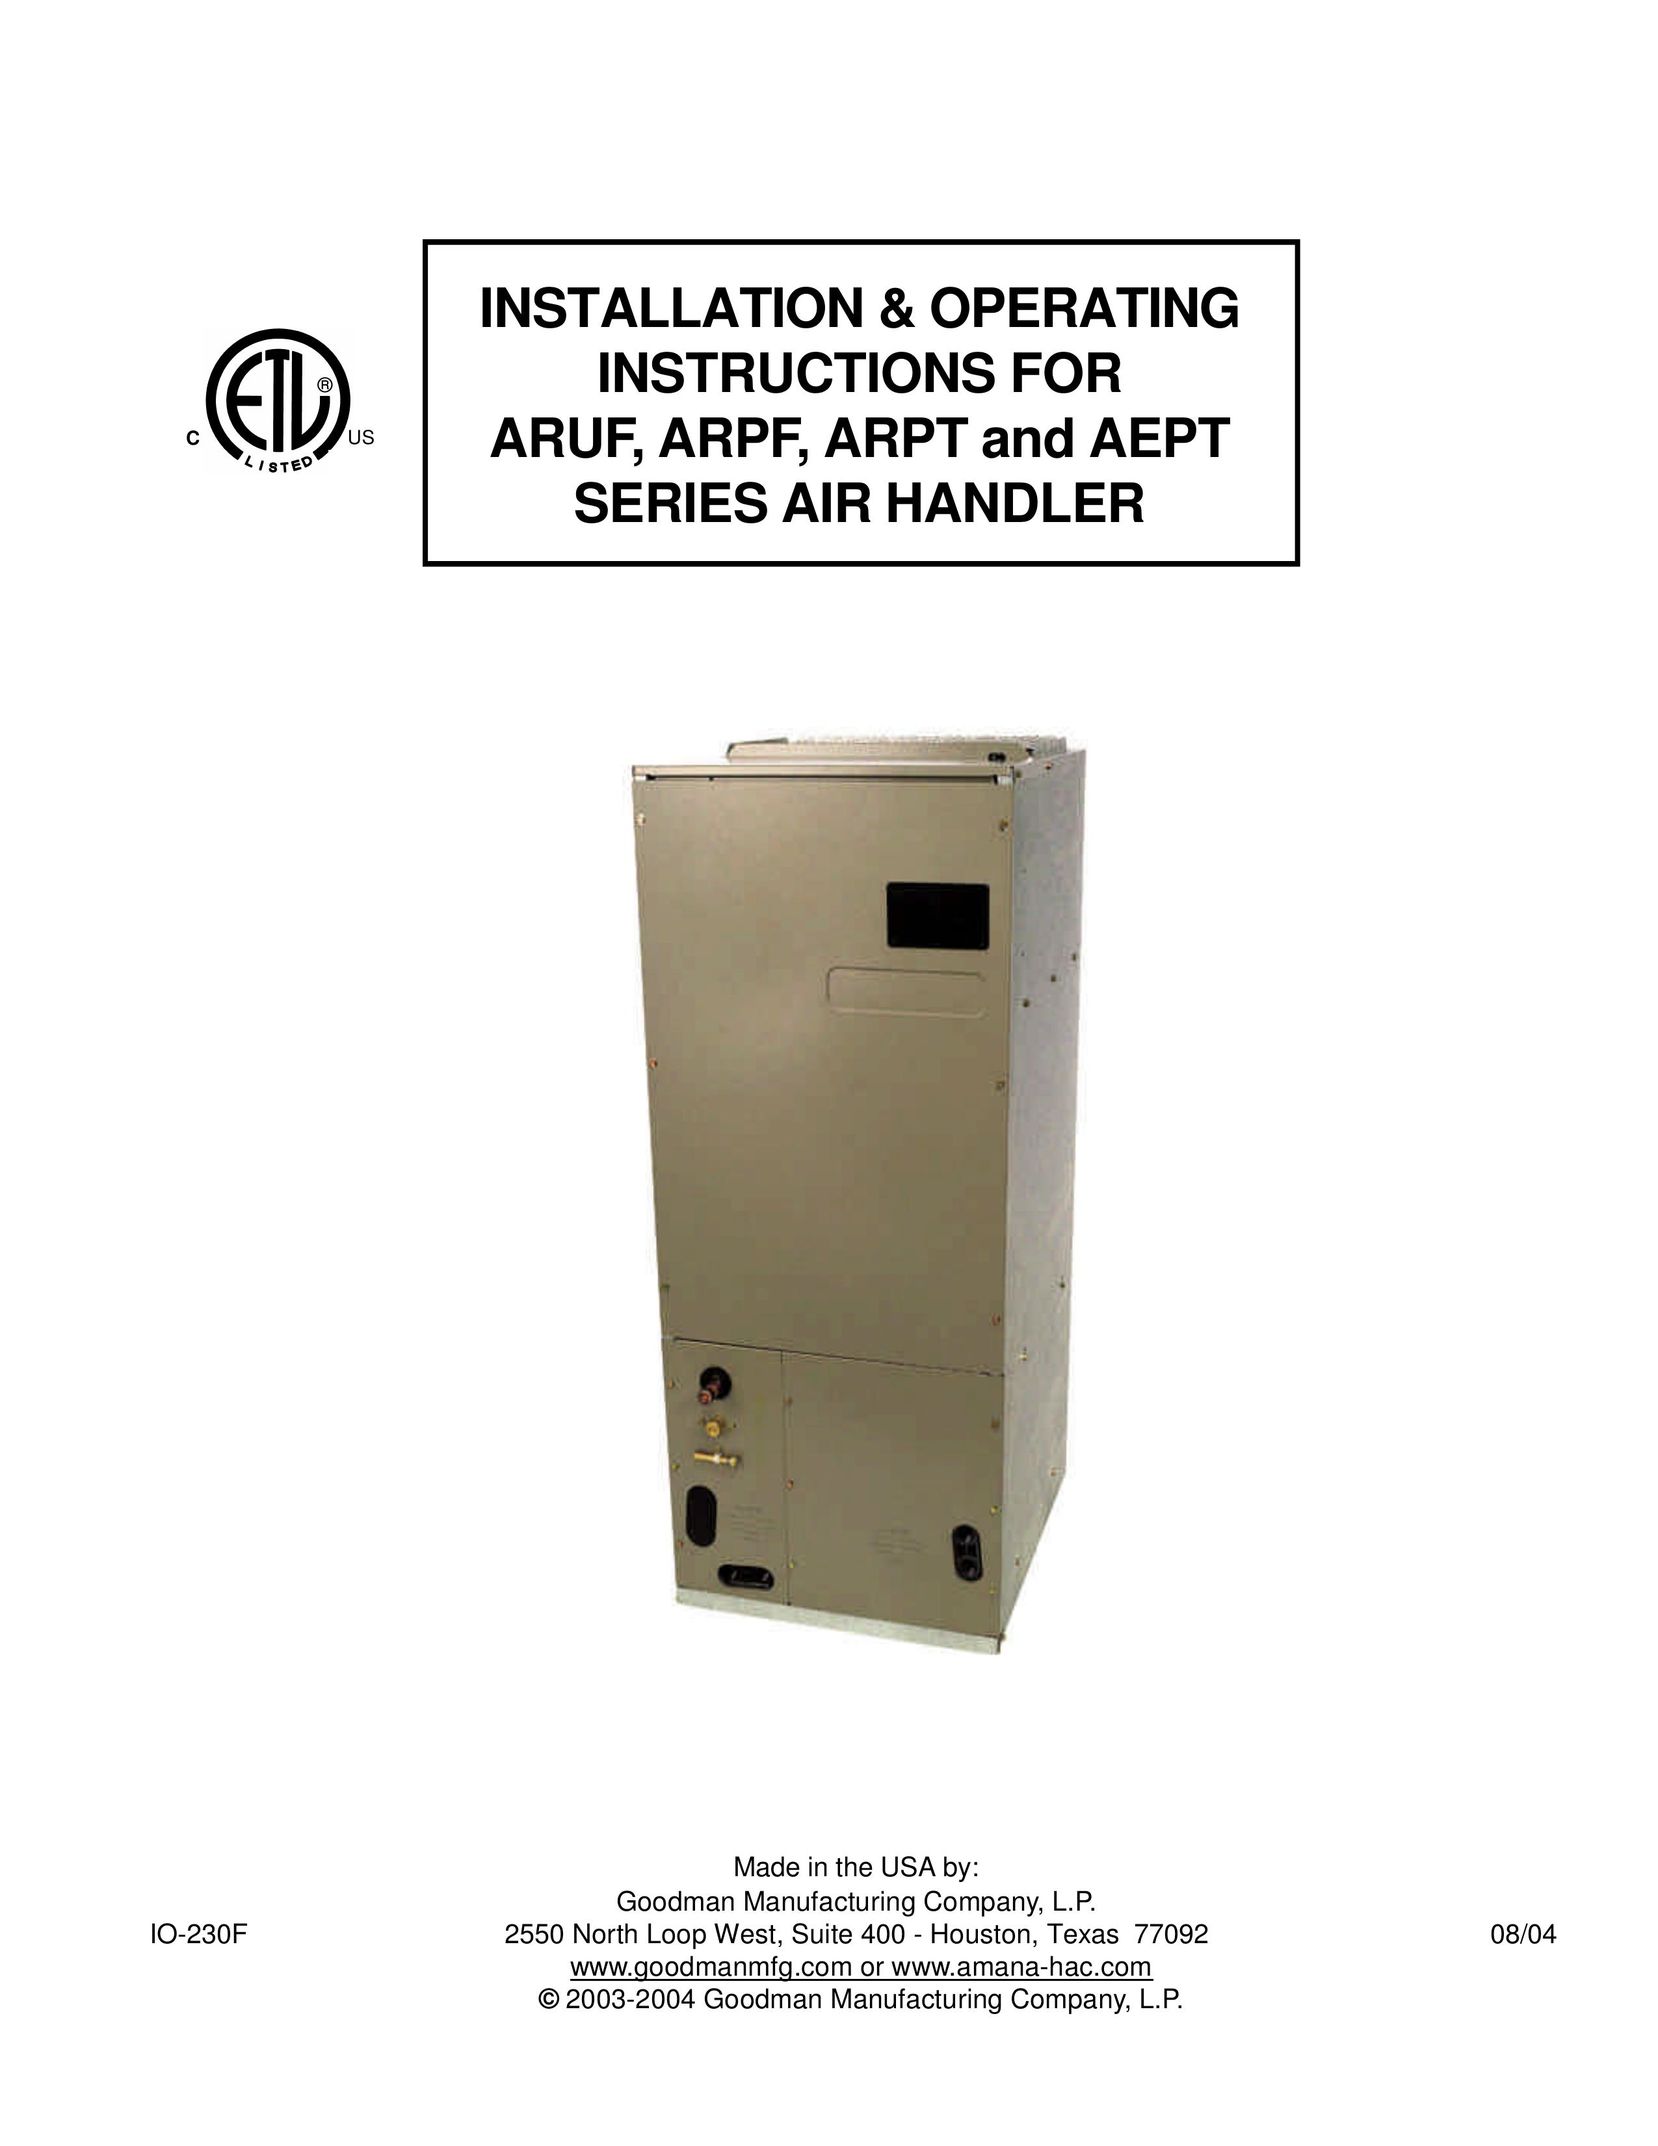 Goodman Mfg ARPT Air Conditioner User Manual